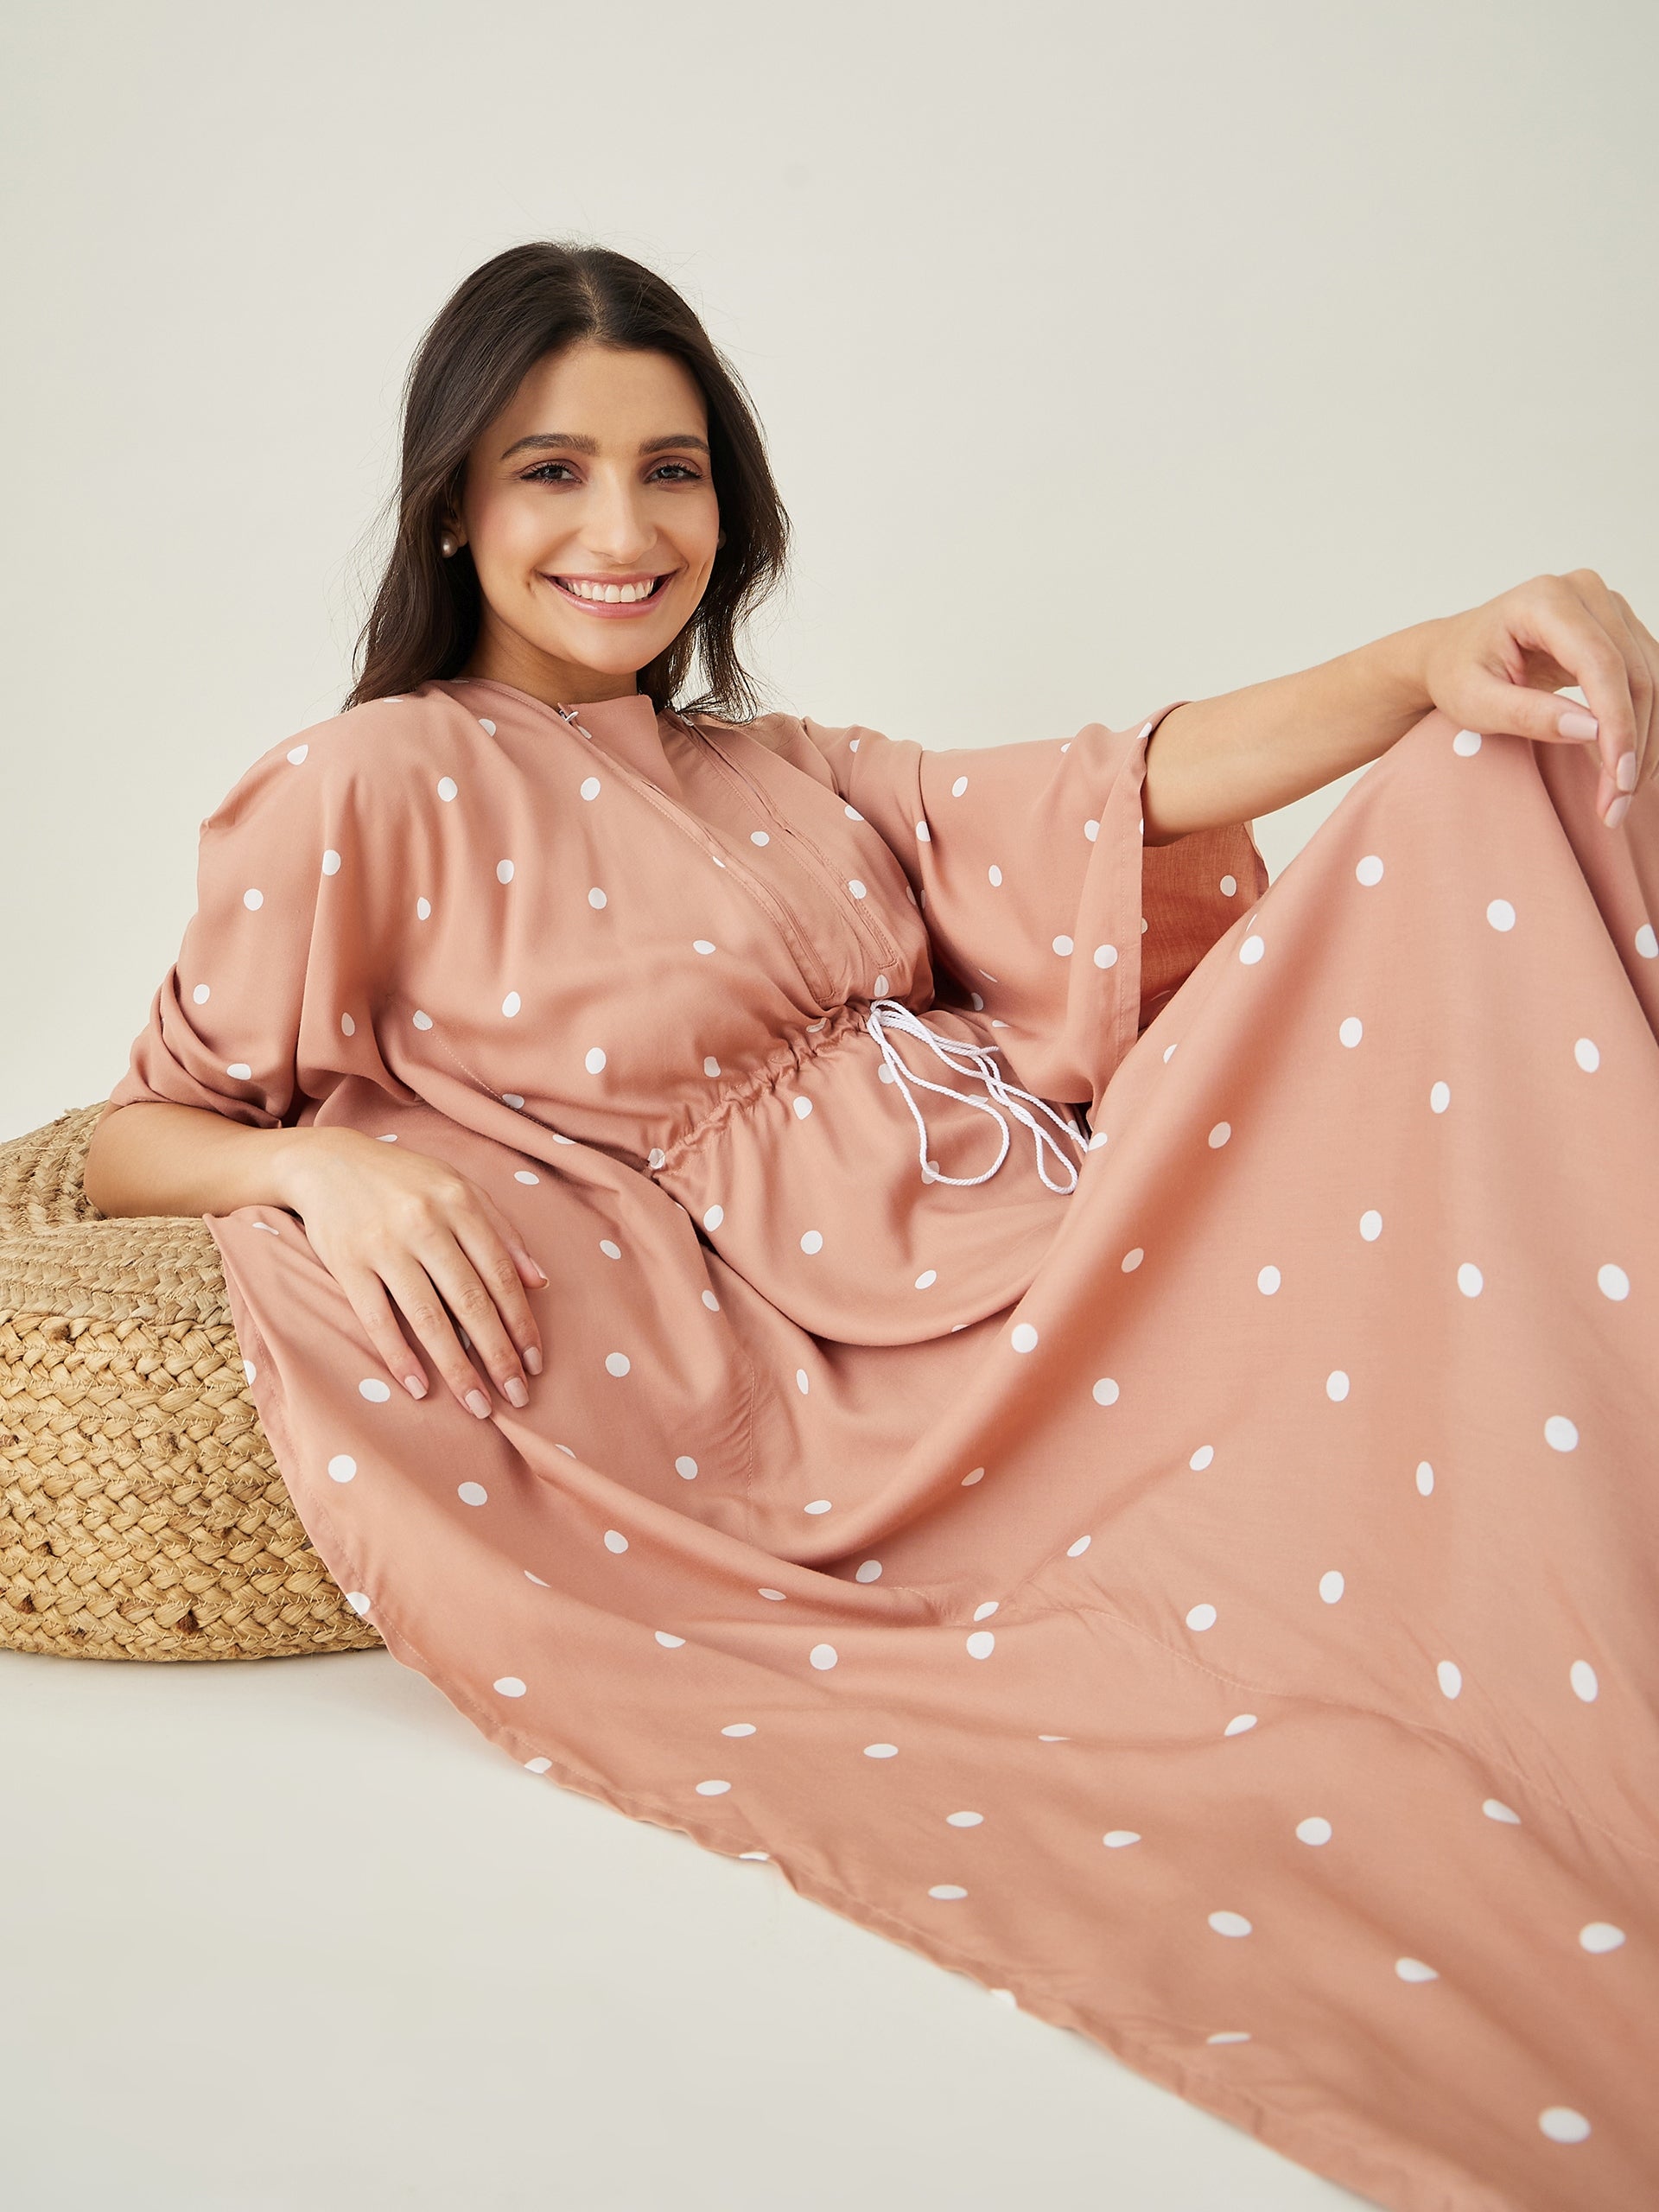 Women's Beige Dotted Delight Maternity Nursing Dress  - The Kaftan Company